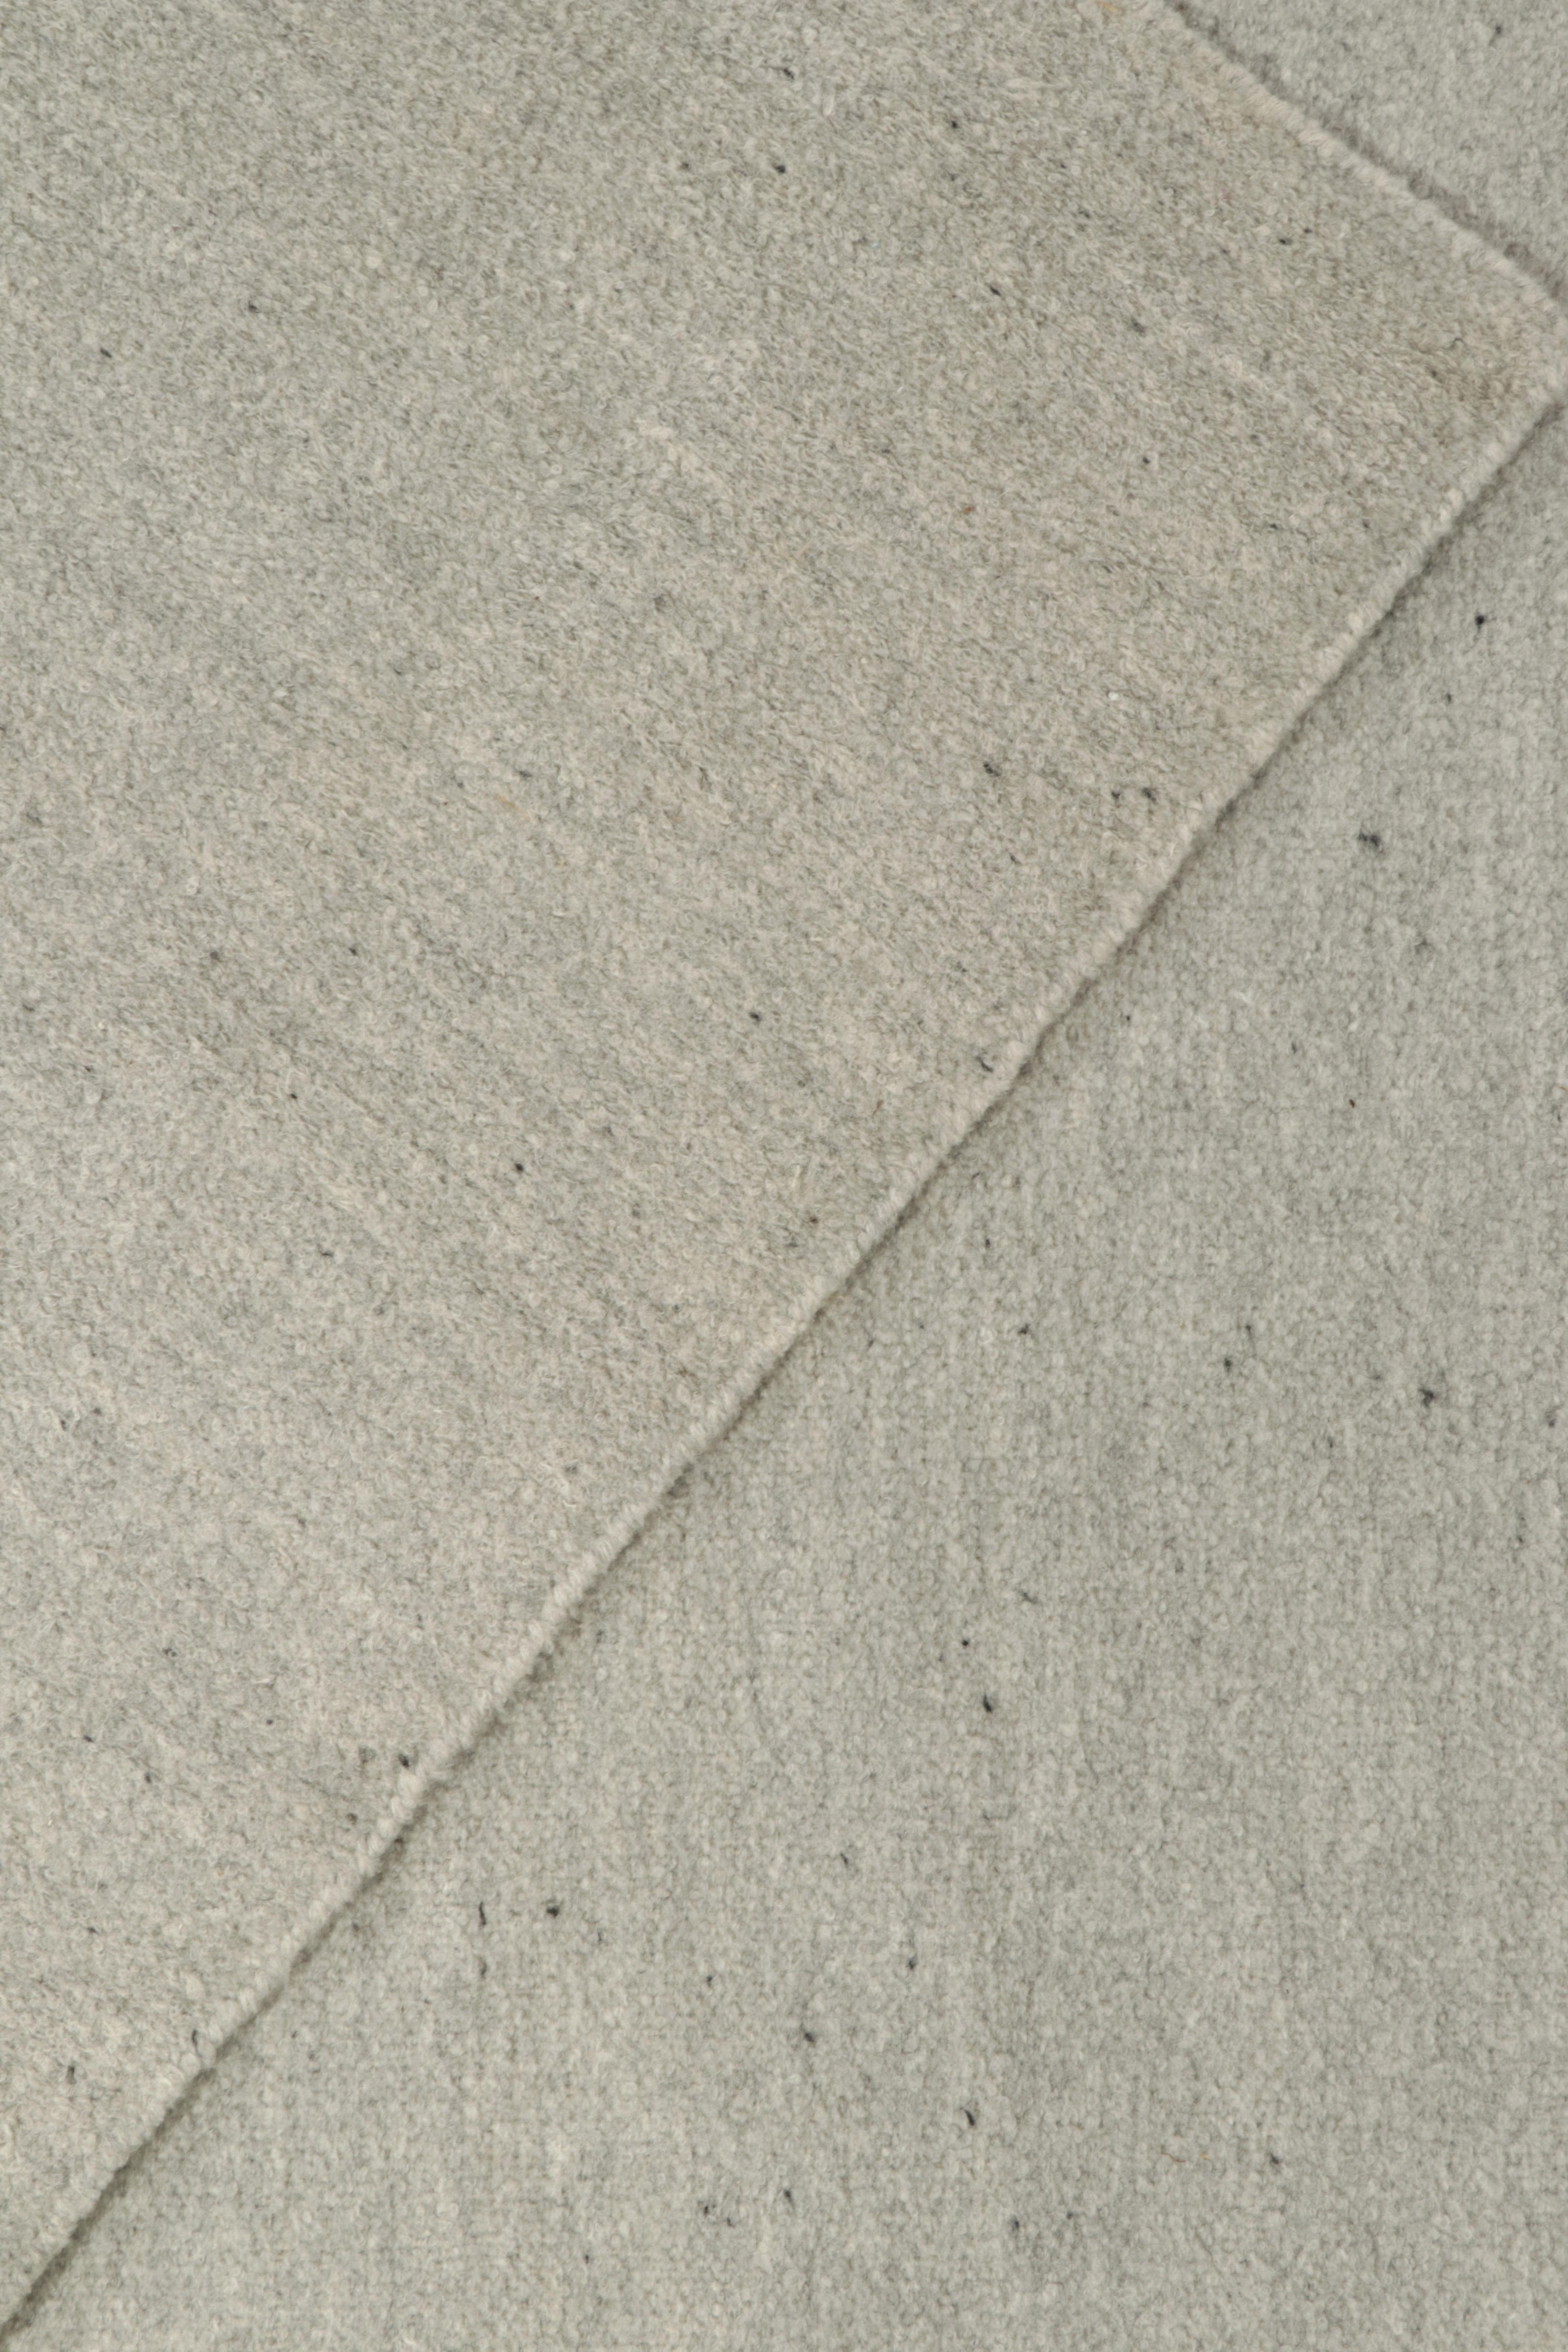 Rug & Kilim’s Contemporary Flatweave rug in Solid Gray Tones, Alpaca Yarn For Sale